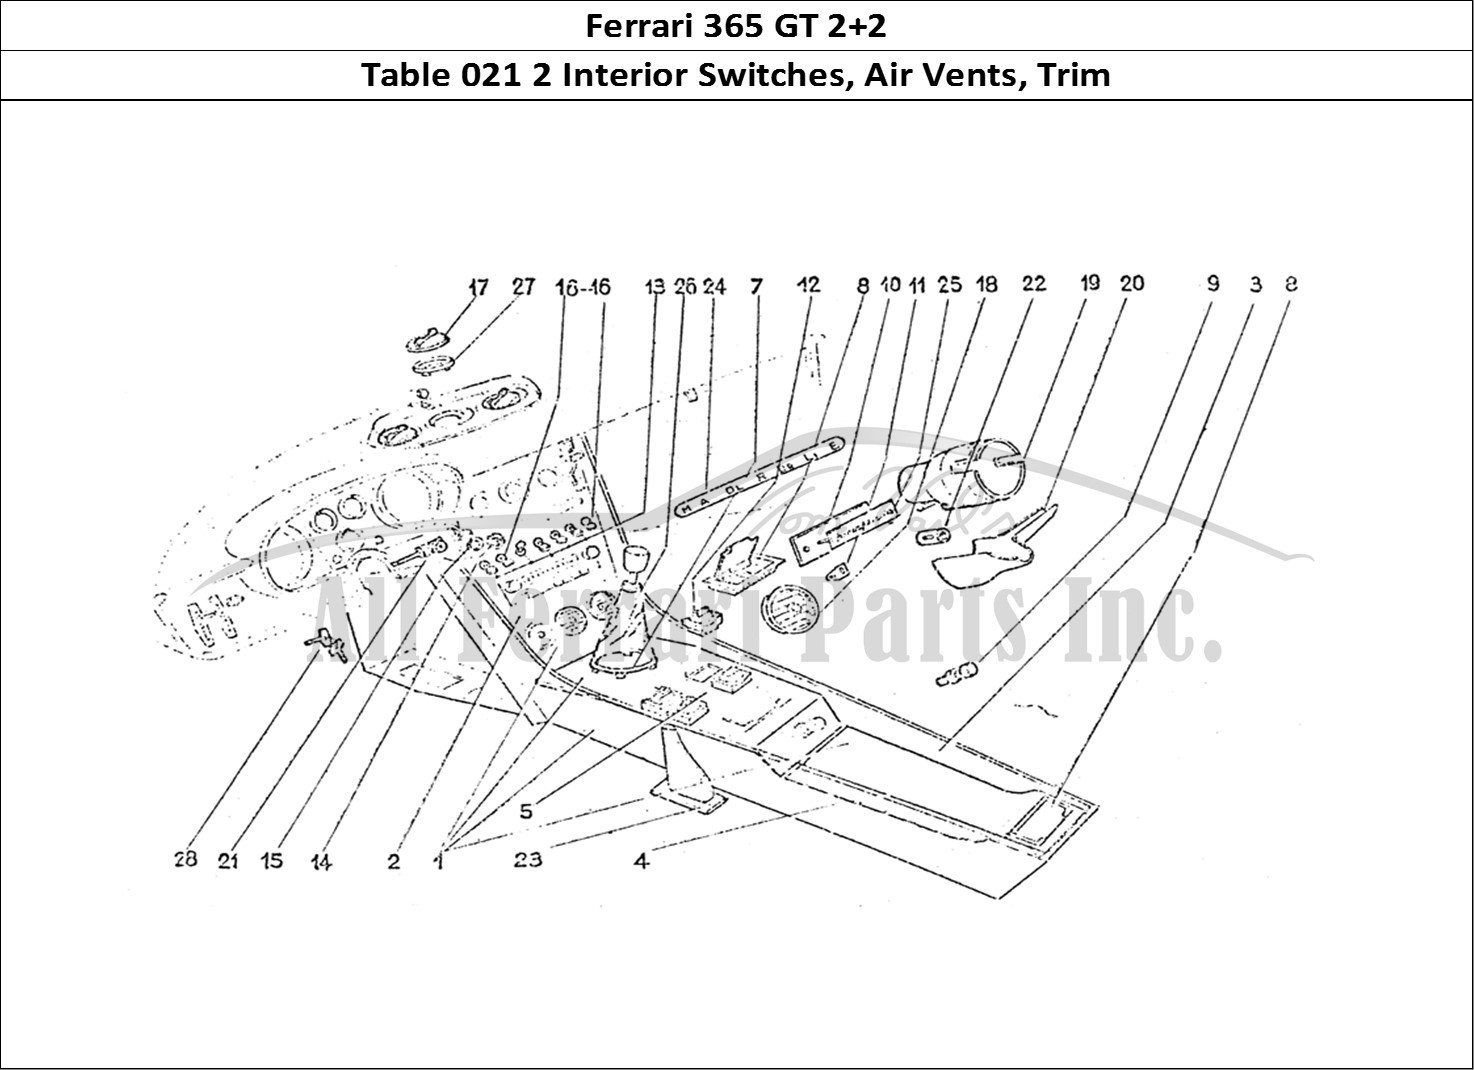 Ferrari Parts Ferrari 365 GT 2+2 (Coachwork) Page 021 Interior switches - Air v